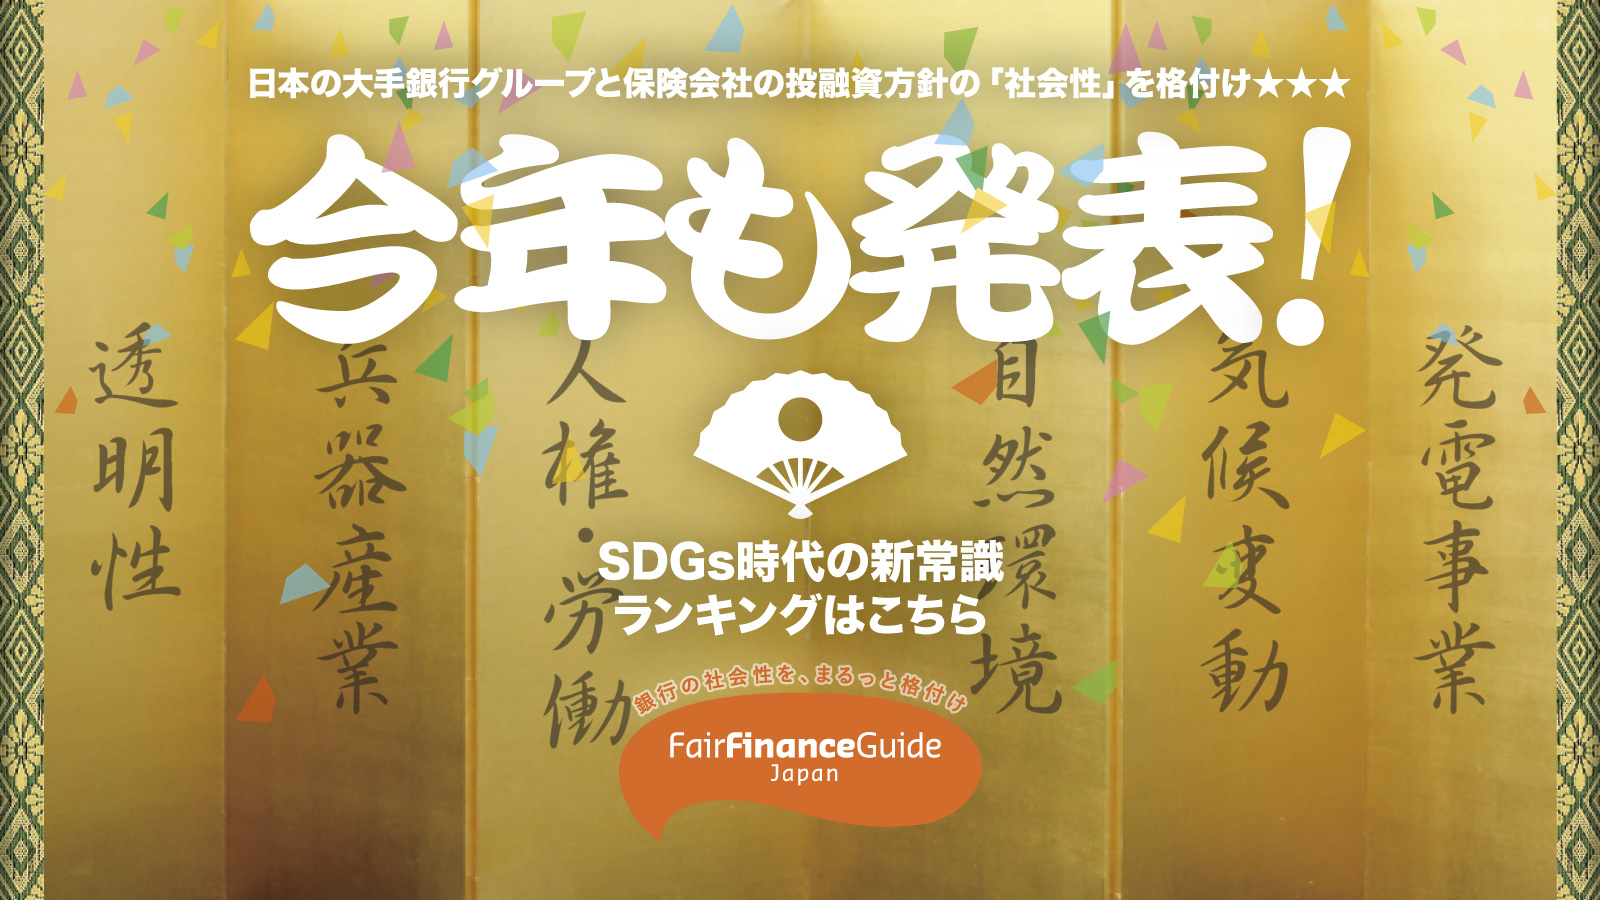 Fair Finance Guide Japan「フェアファイナンスガイド」2021年版スコア